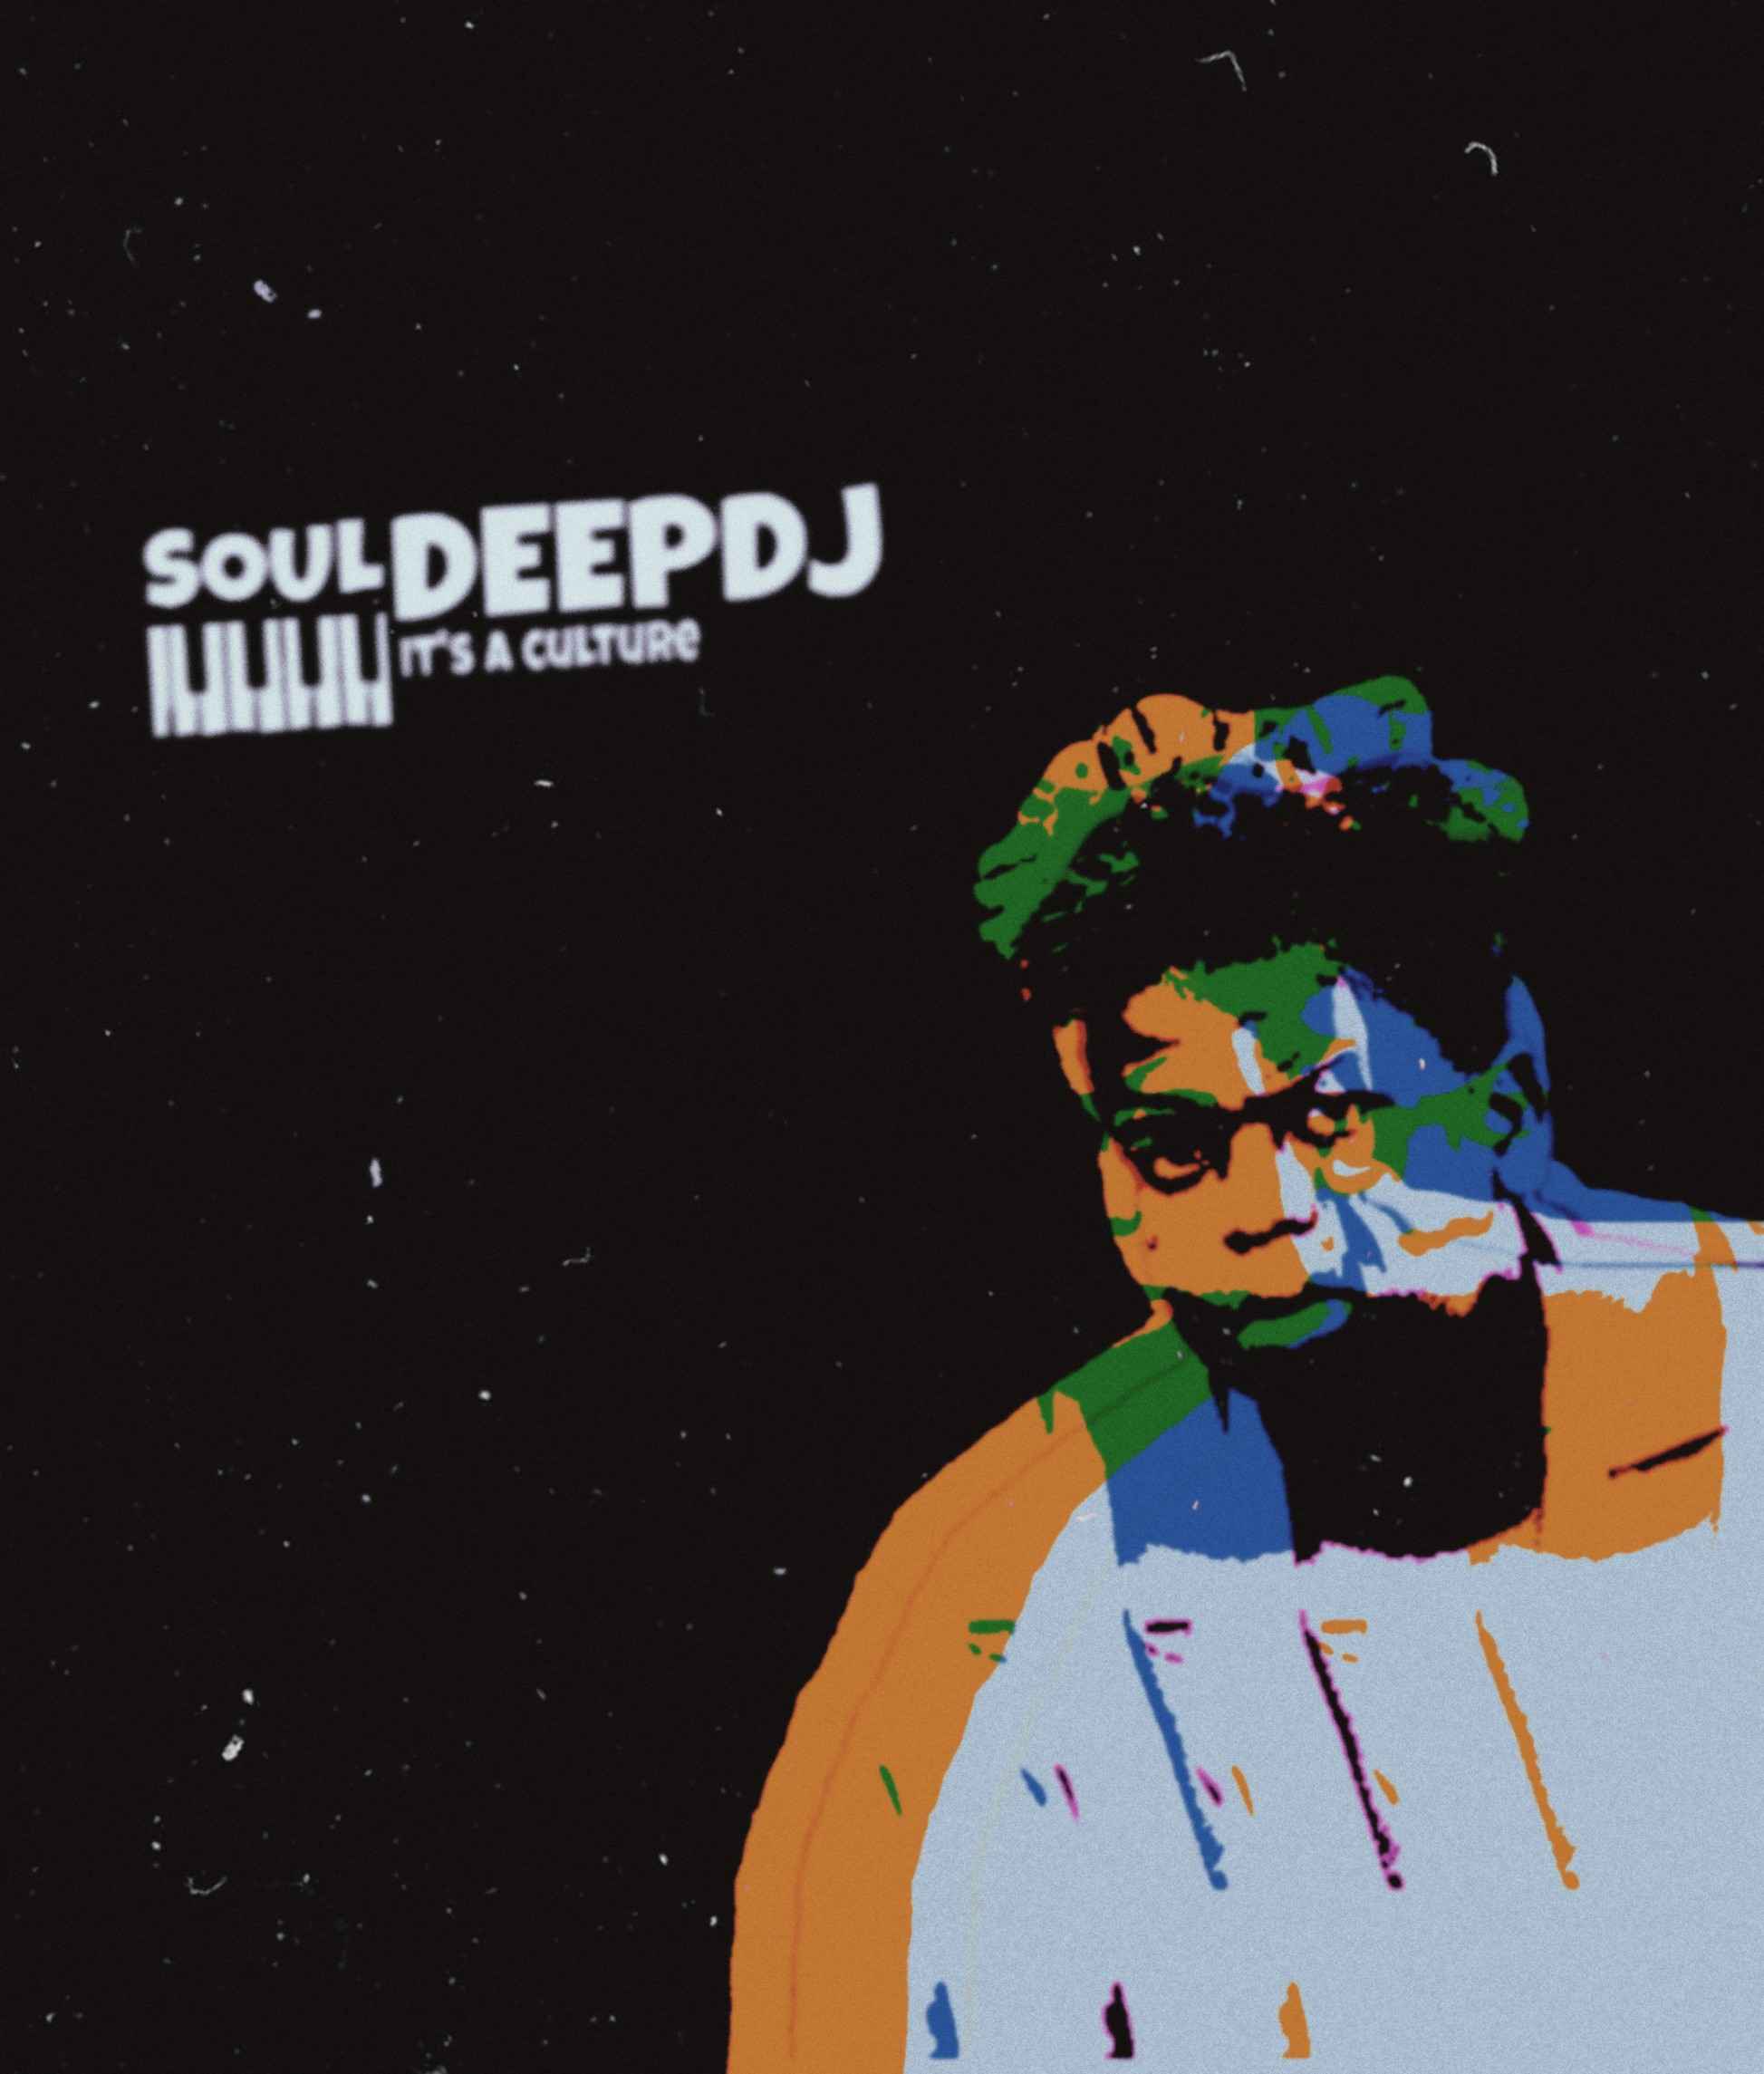 Soul DEEPDJ Touch The Sky (Vocal Mix)  